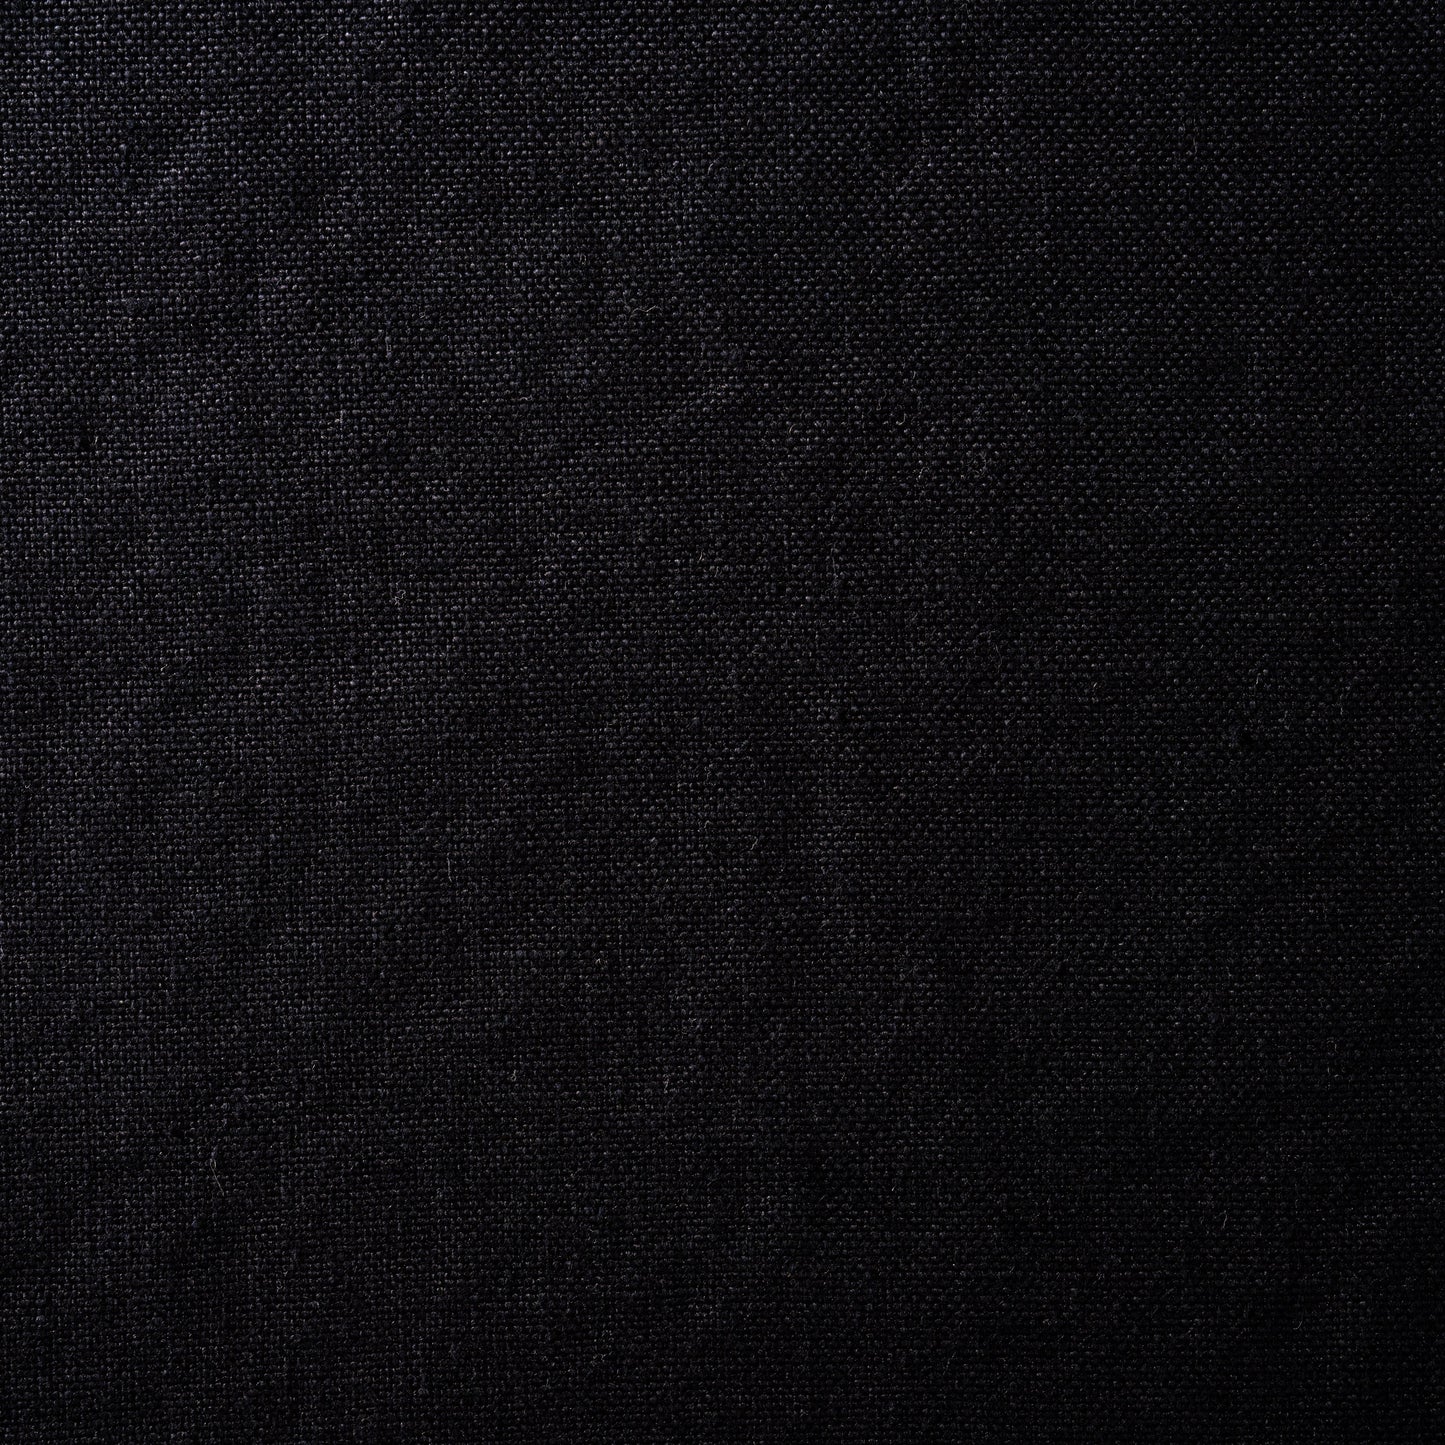 12 oz/sq yard 100% Upholstery/ Slipcover Weight Linen Black